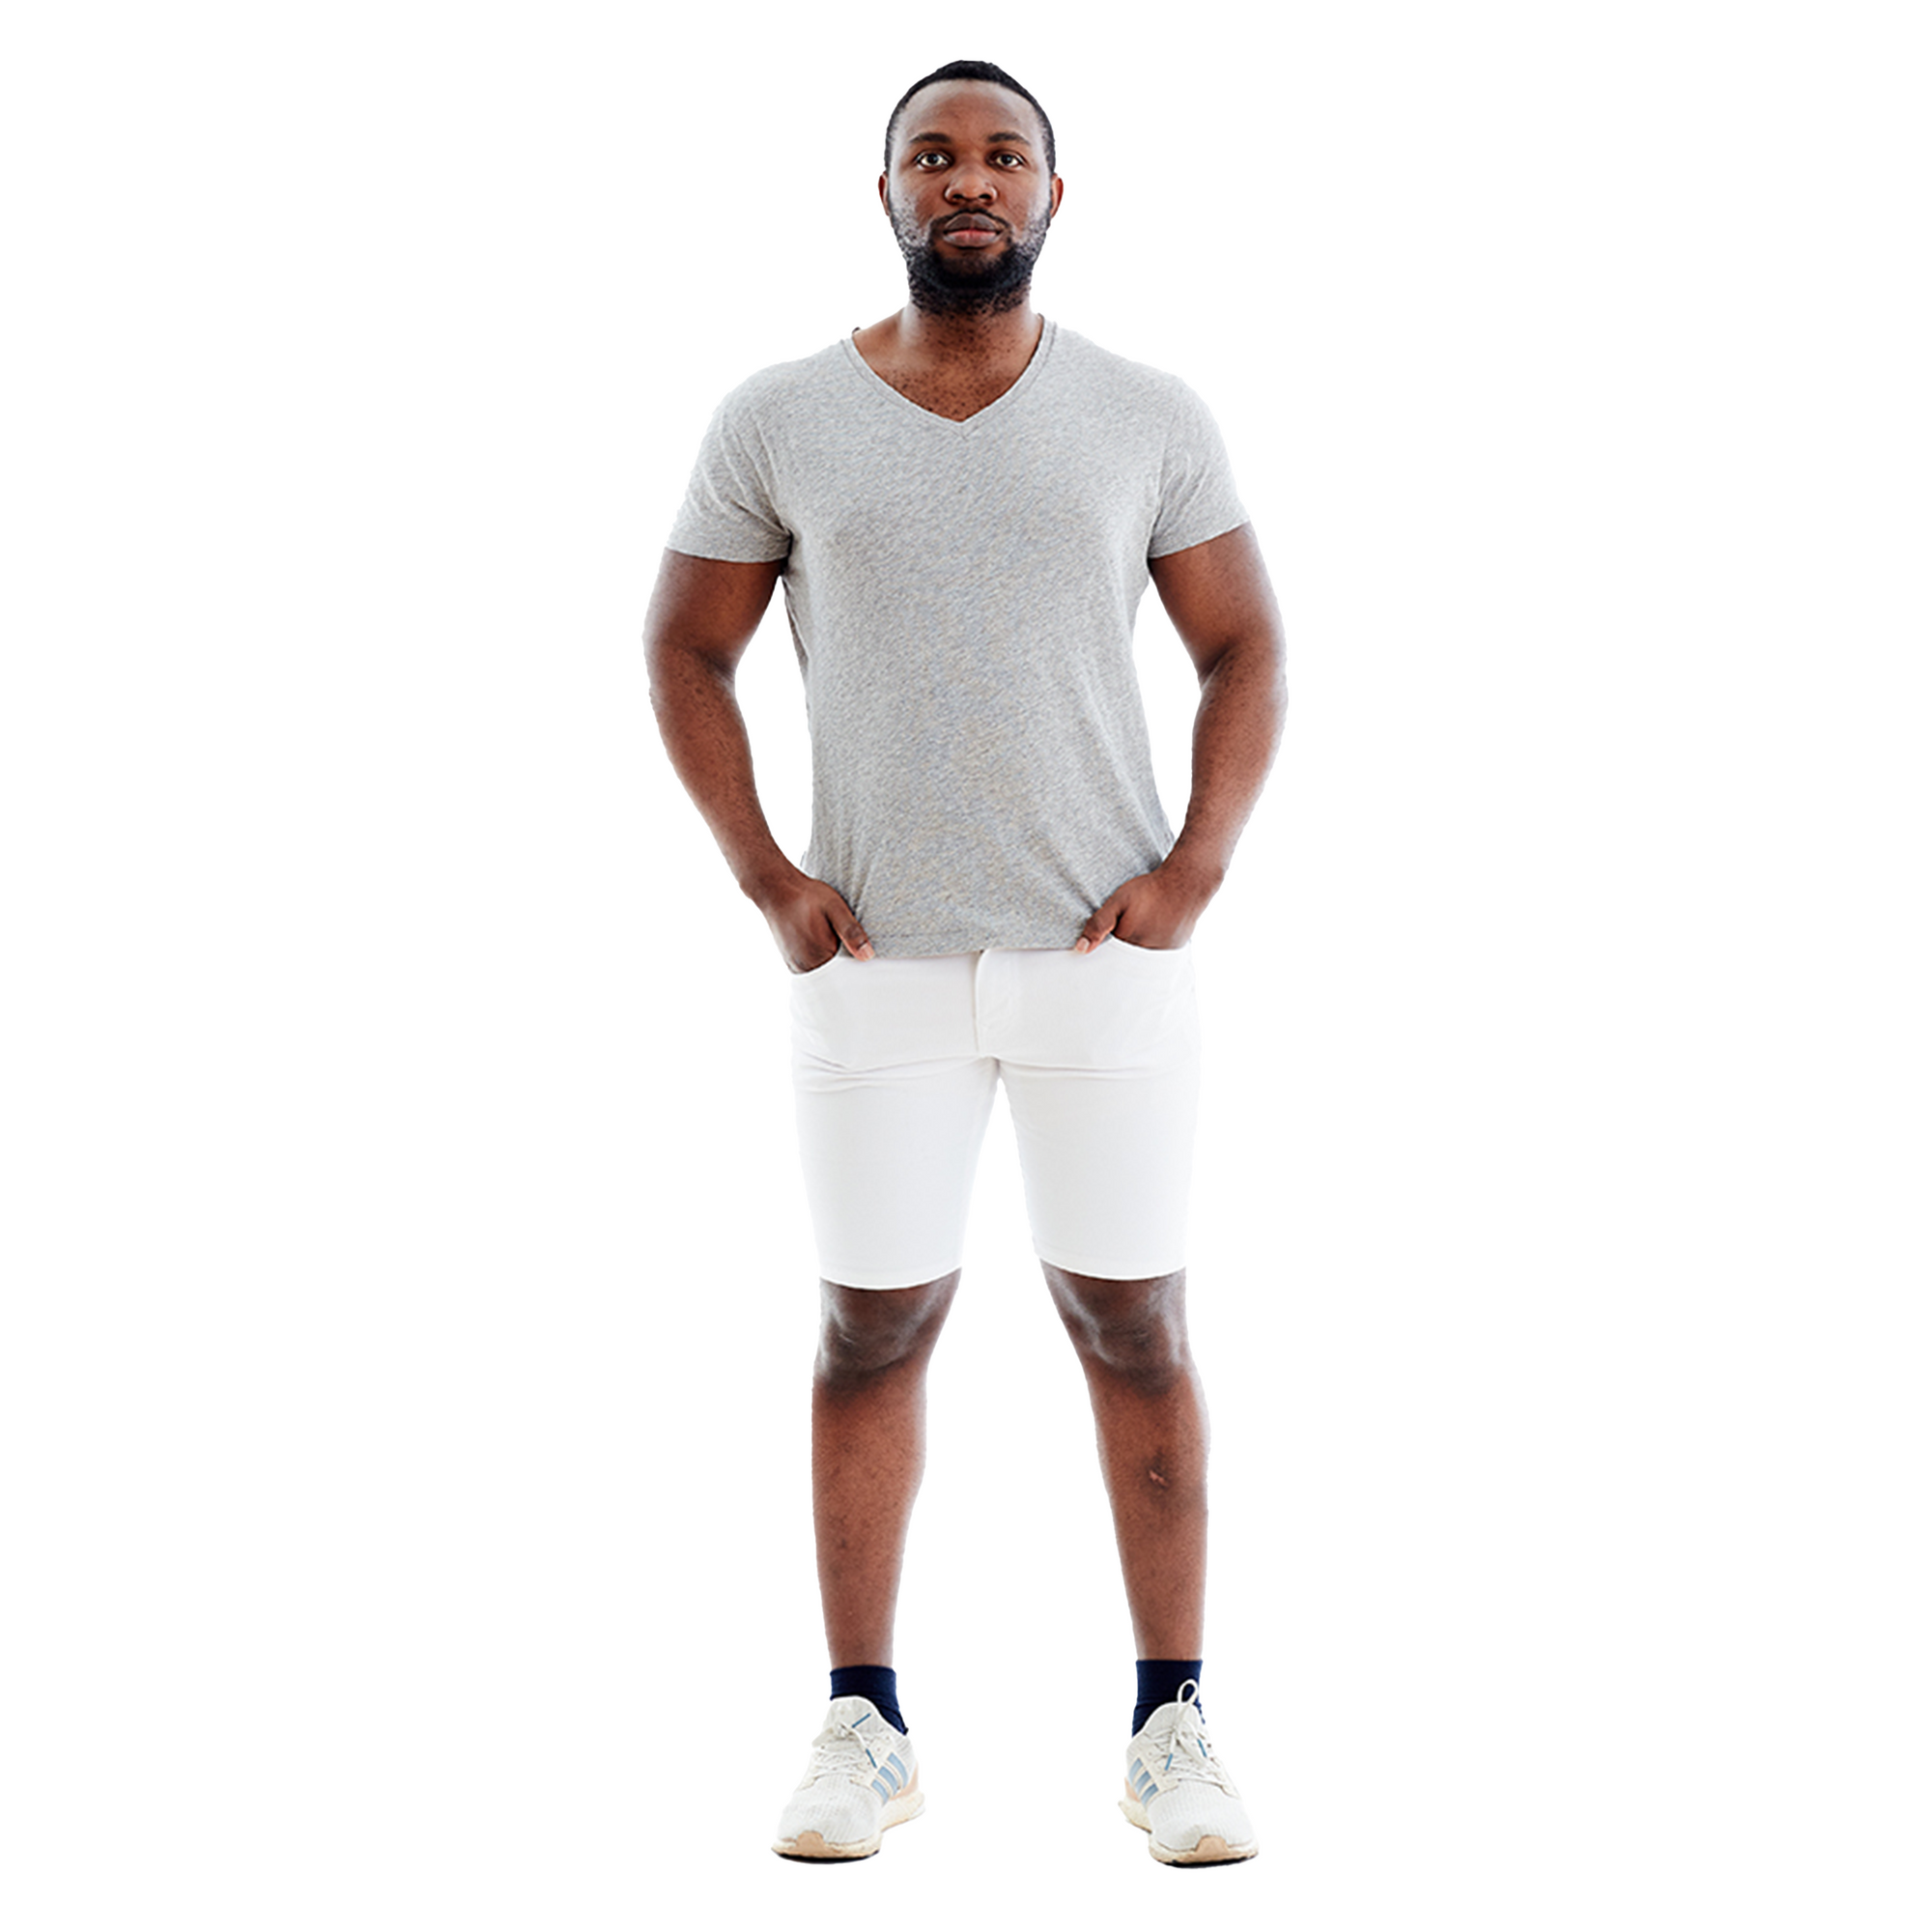 Bermuda de Hombre GQ shorts Blanco GQ JEANS